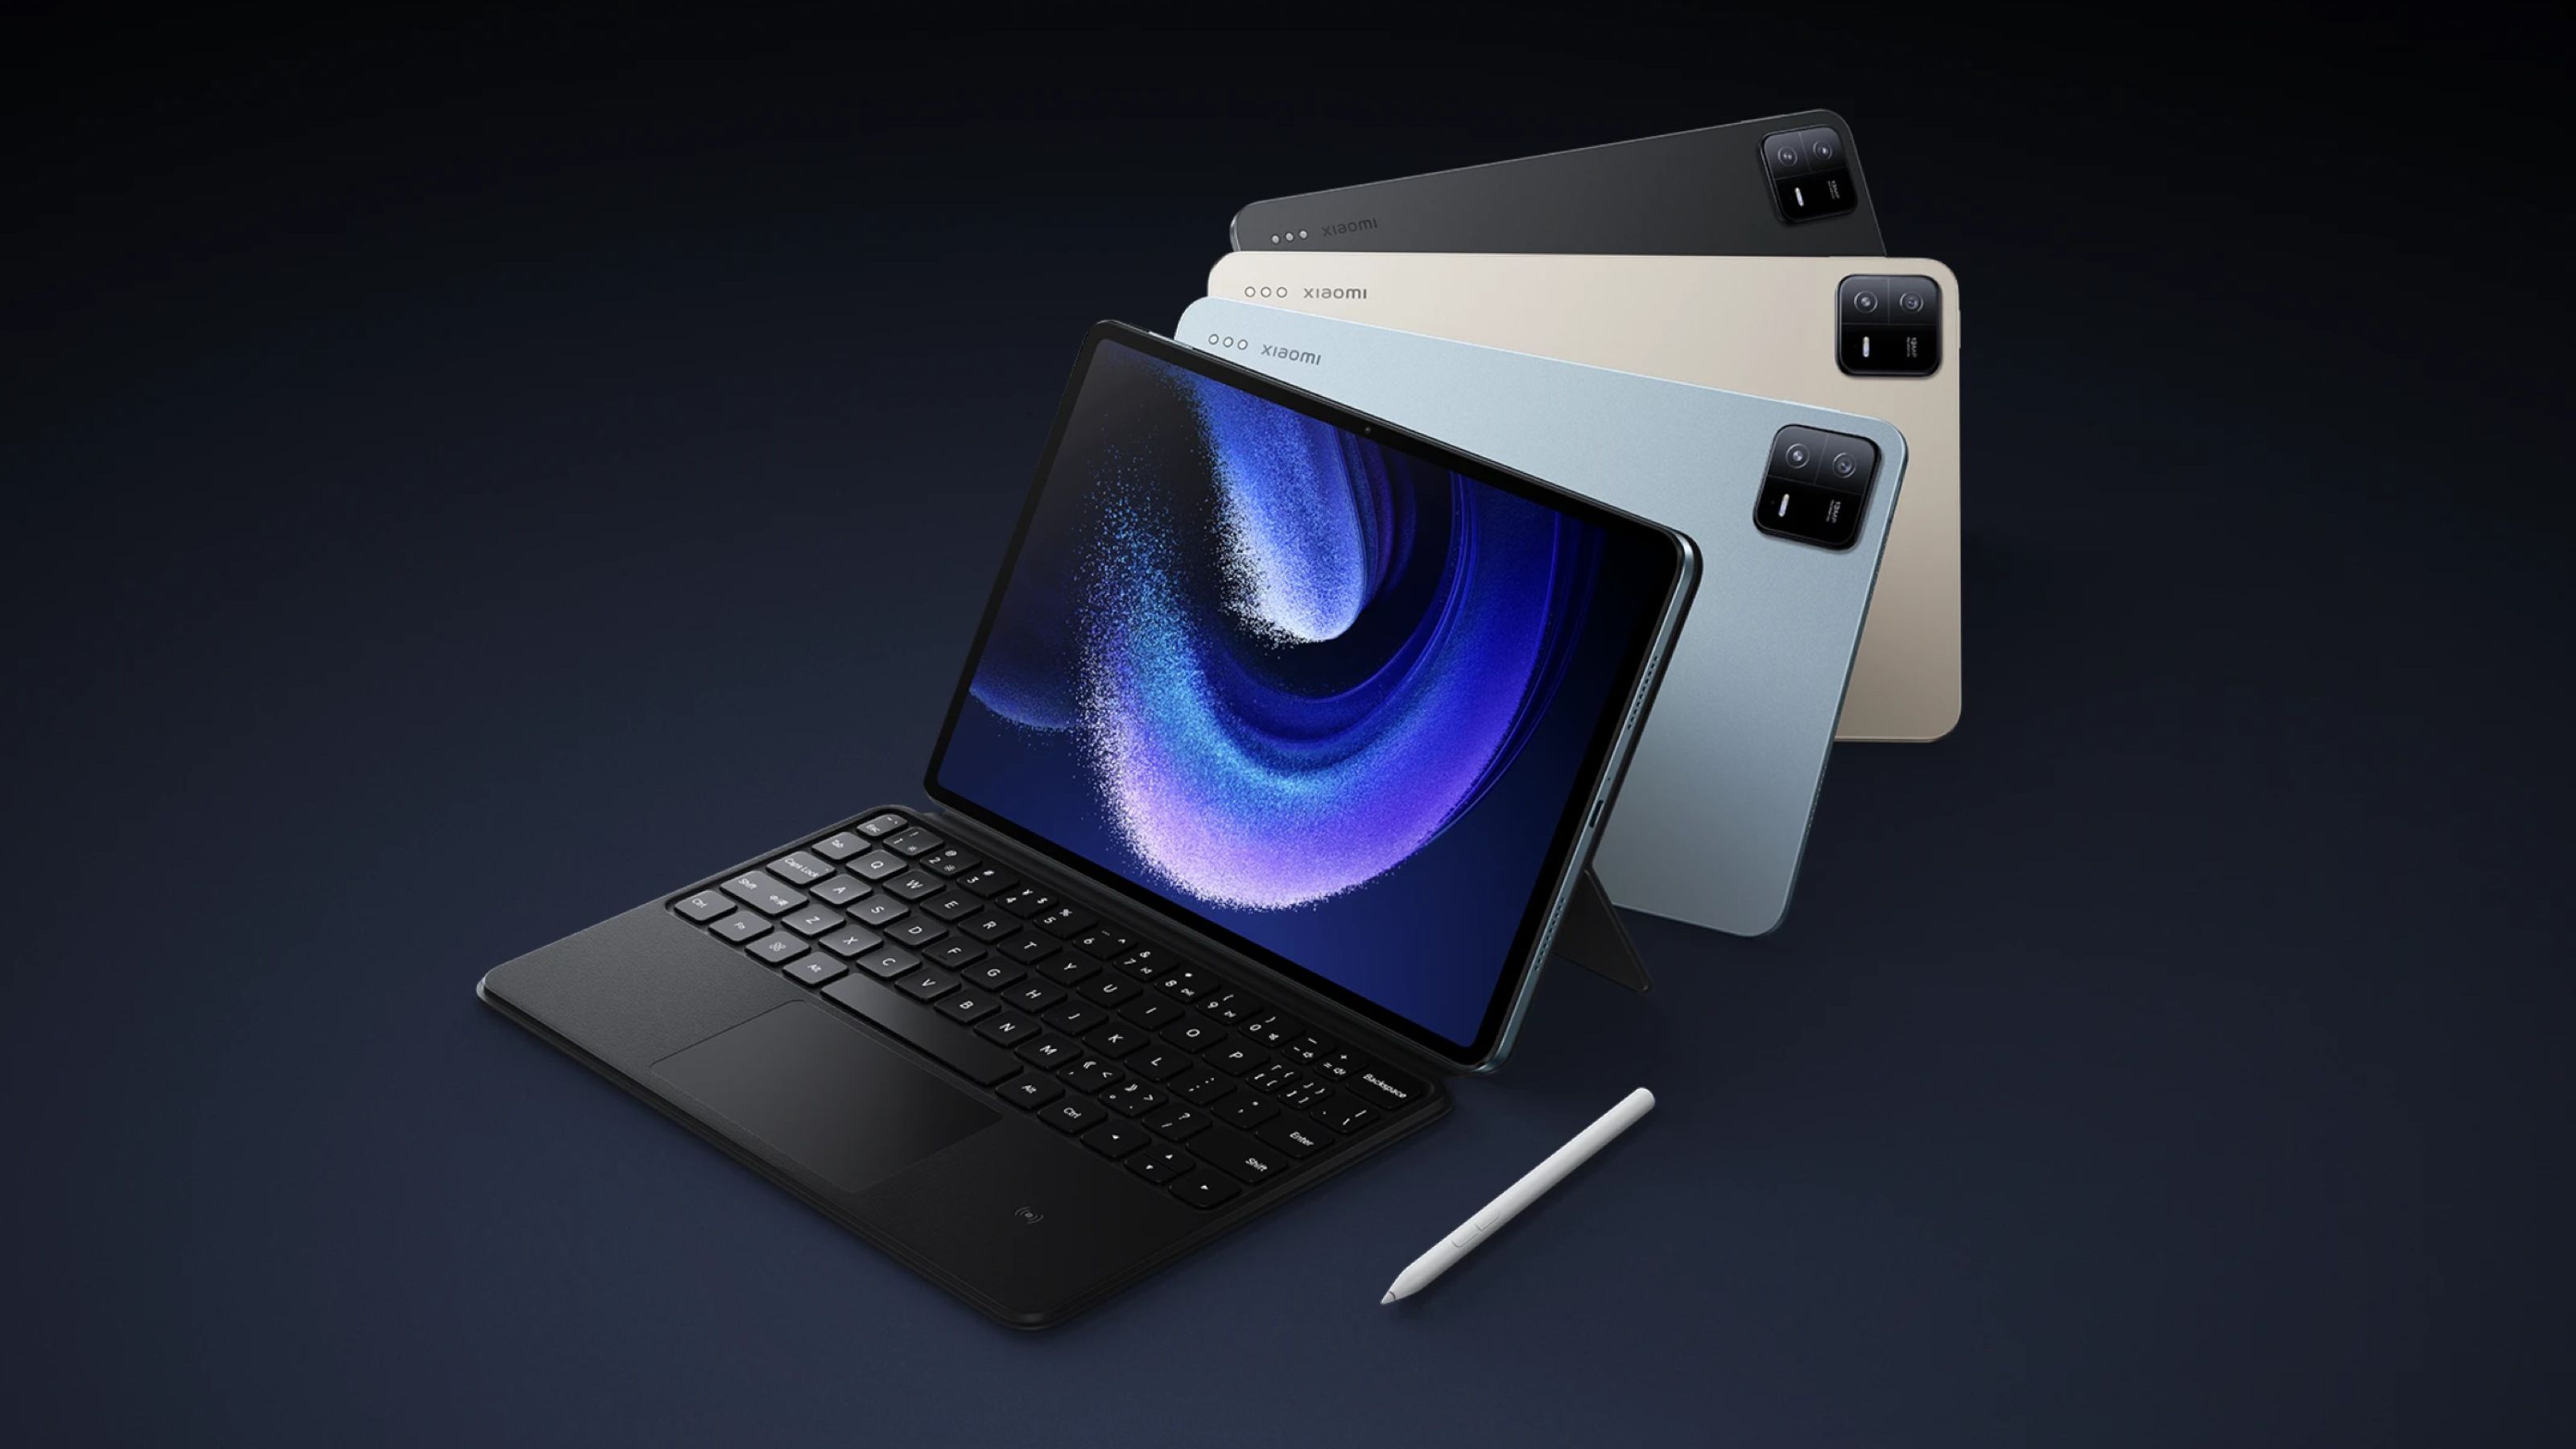 Exame Informática  Teste ao tablet Pad 6 da Xiaomi